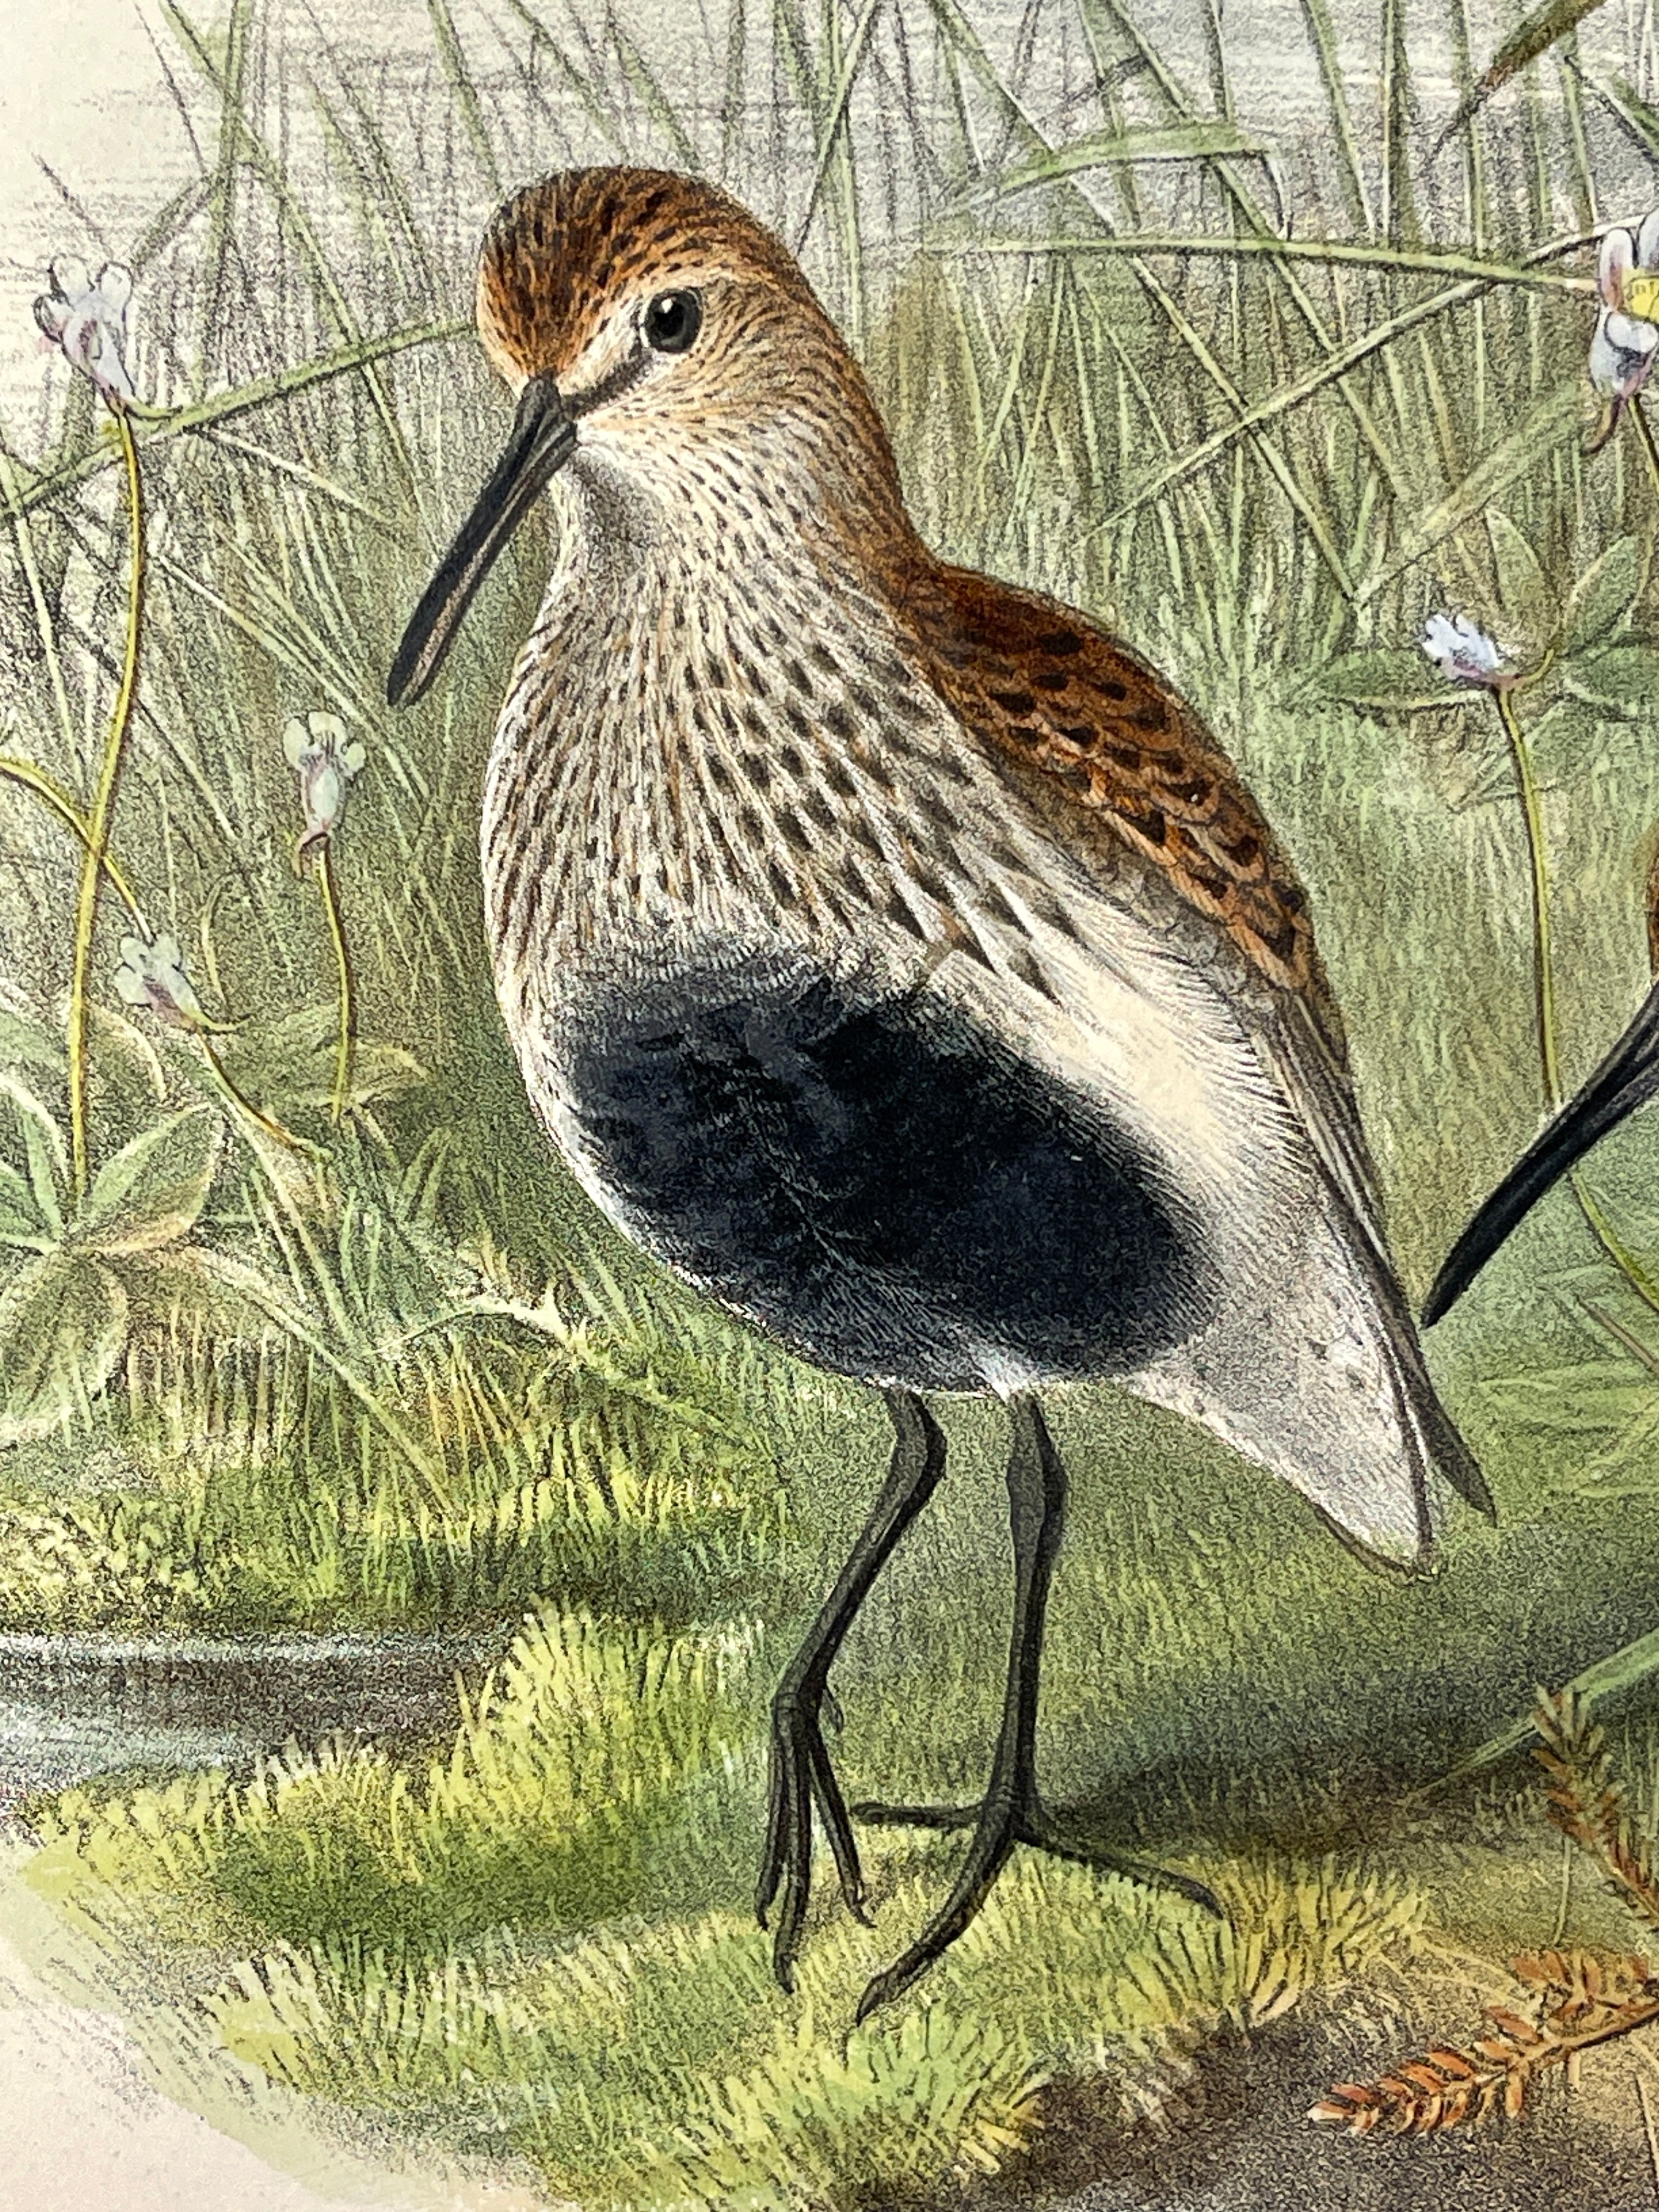 Pelidna Cinclus (Summer Plumage) Dunlin - John Gould Birds Of Great Britain - Hand Colored Lithograph